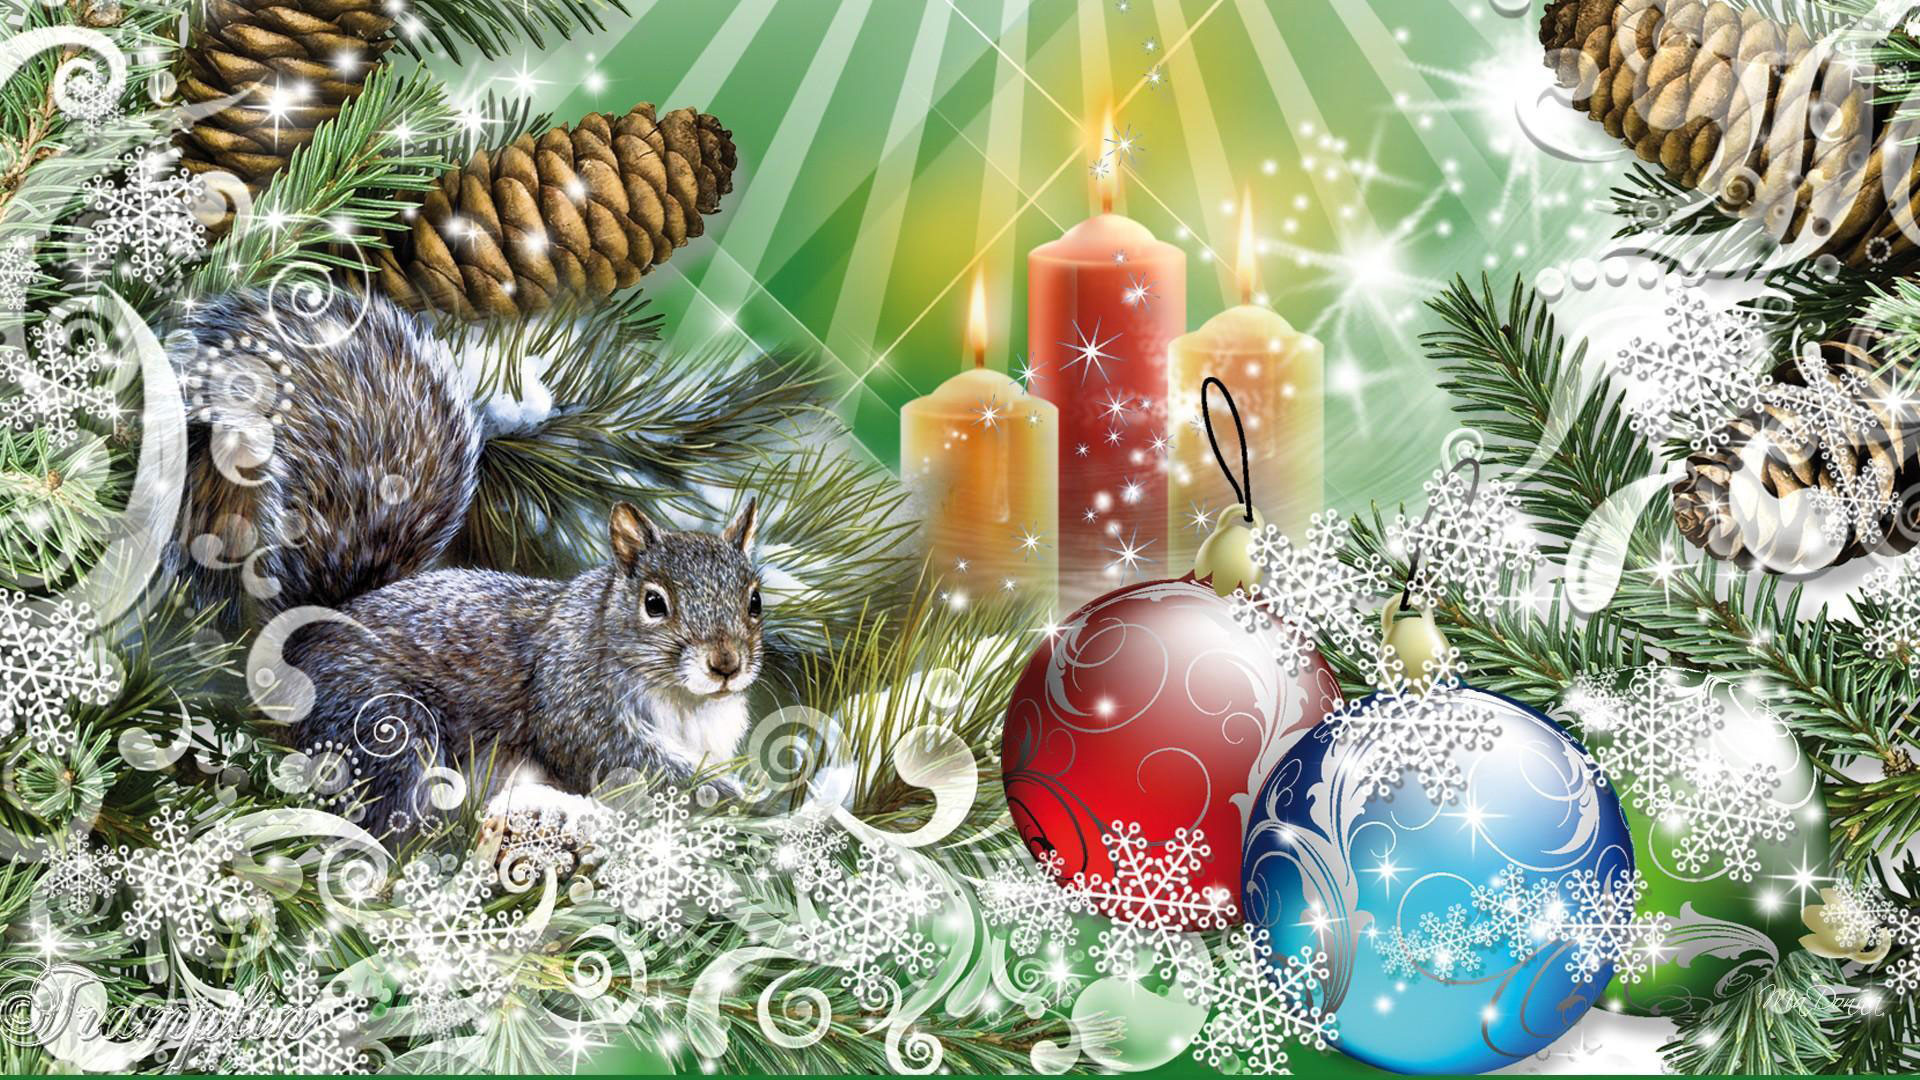 1920x1080 hd pics photos cute christmas squirrel decorations hd quality desktop background  wallpaper